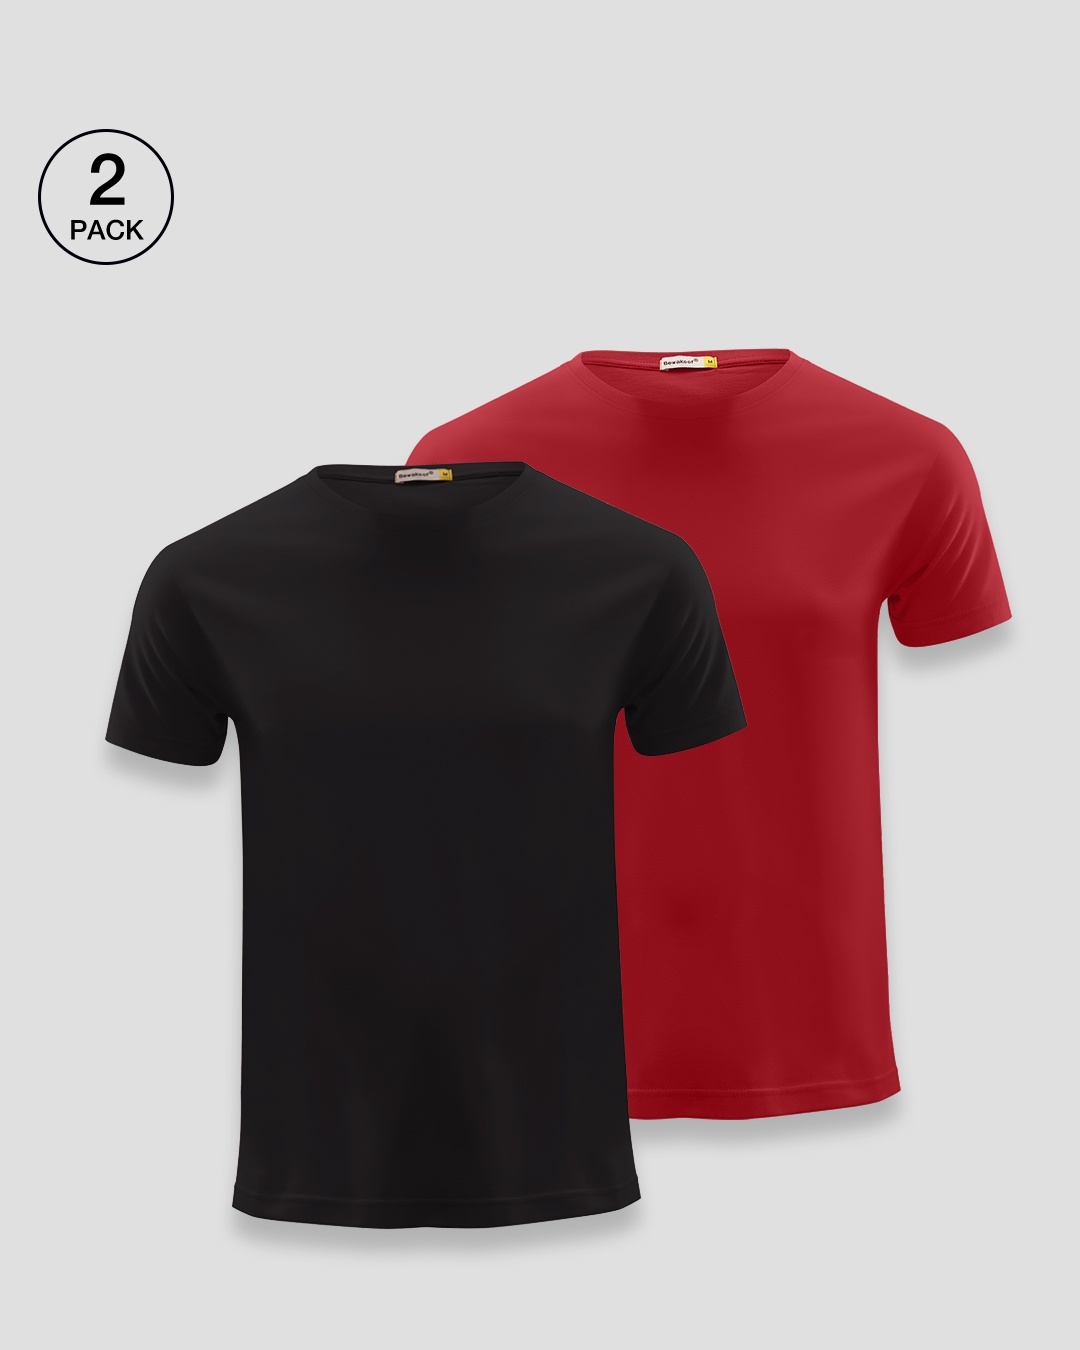 Shop Men's Plain Half Sleeve T-Shirt Pack of 2 (Black & Red)